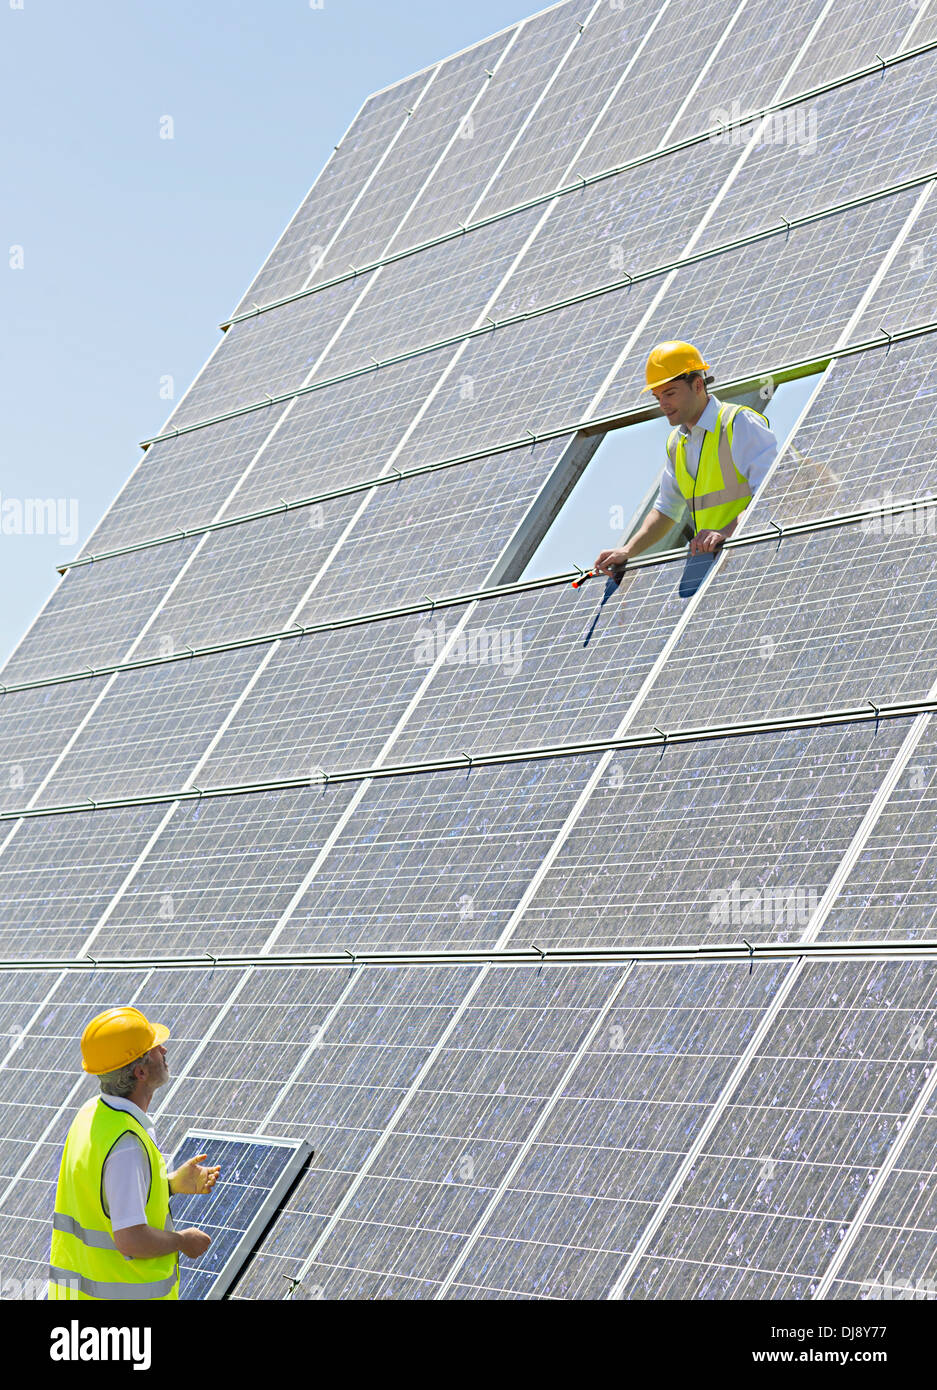 Workers examining solar panels Stock Photo